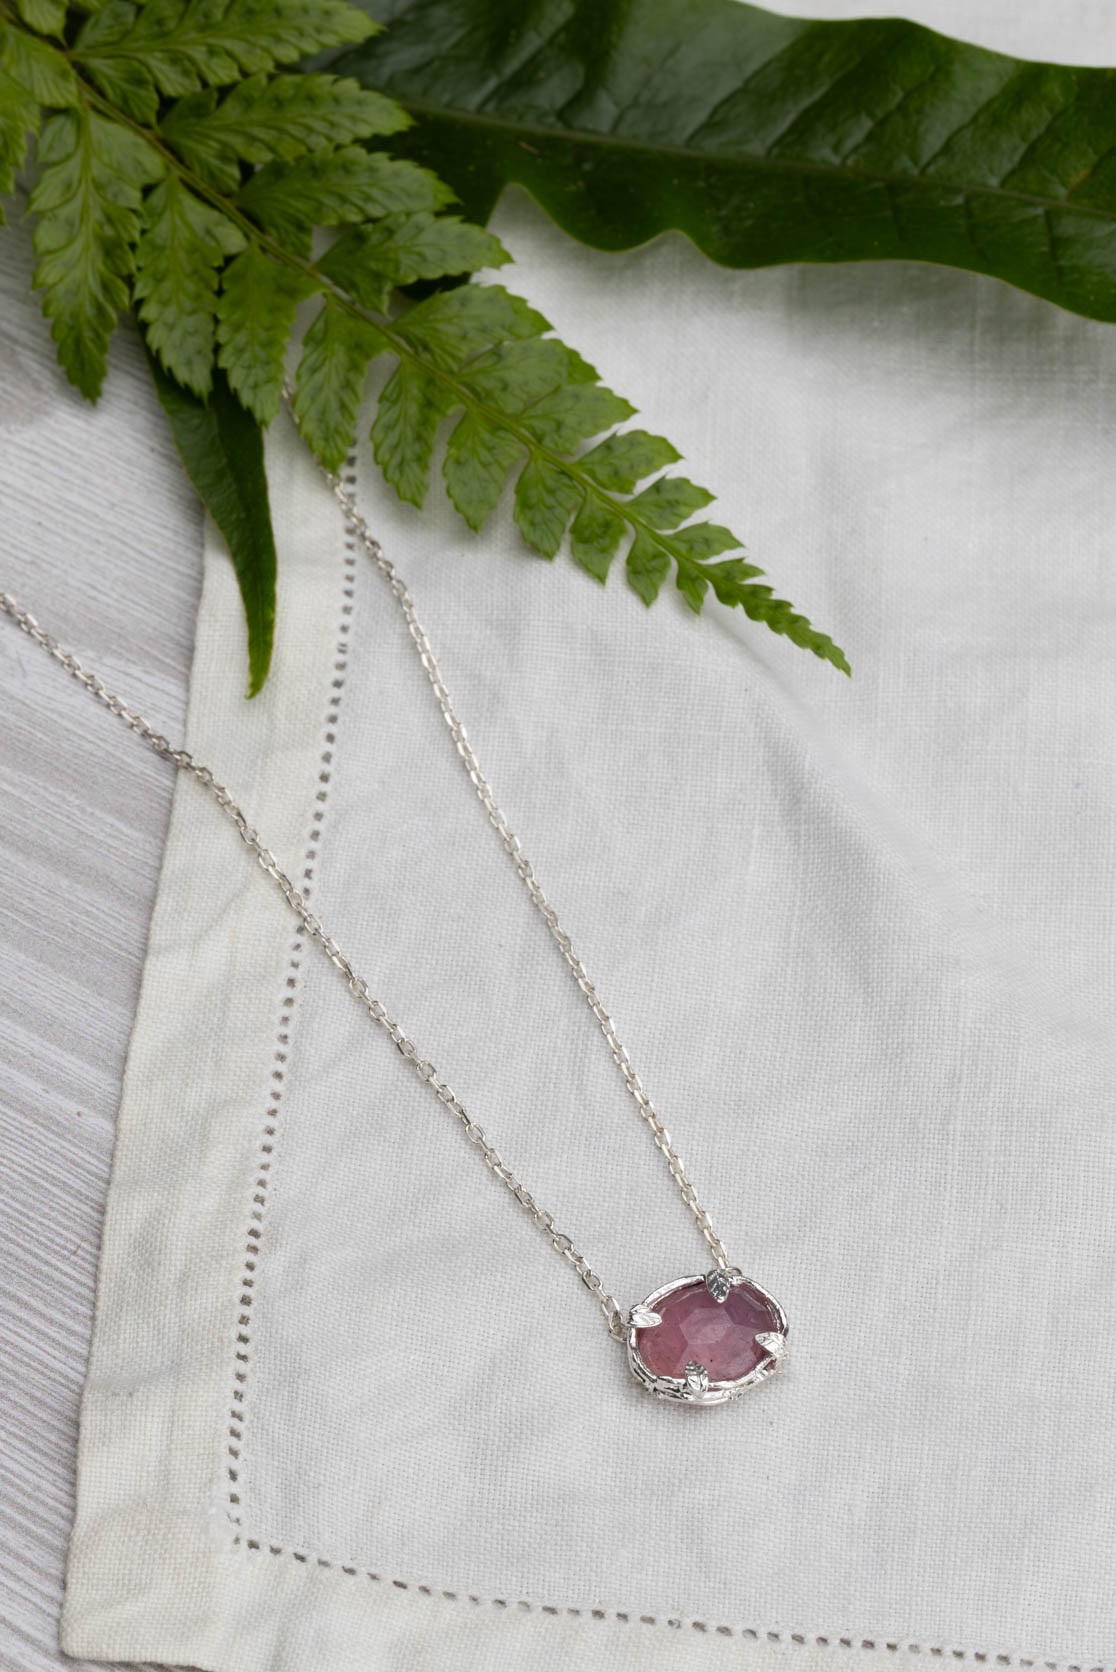 Botanical Nest Necklace with labradorite, ruby or kyanite gemstone